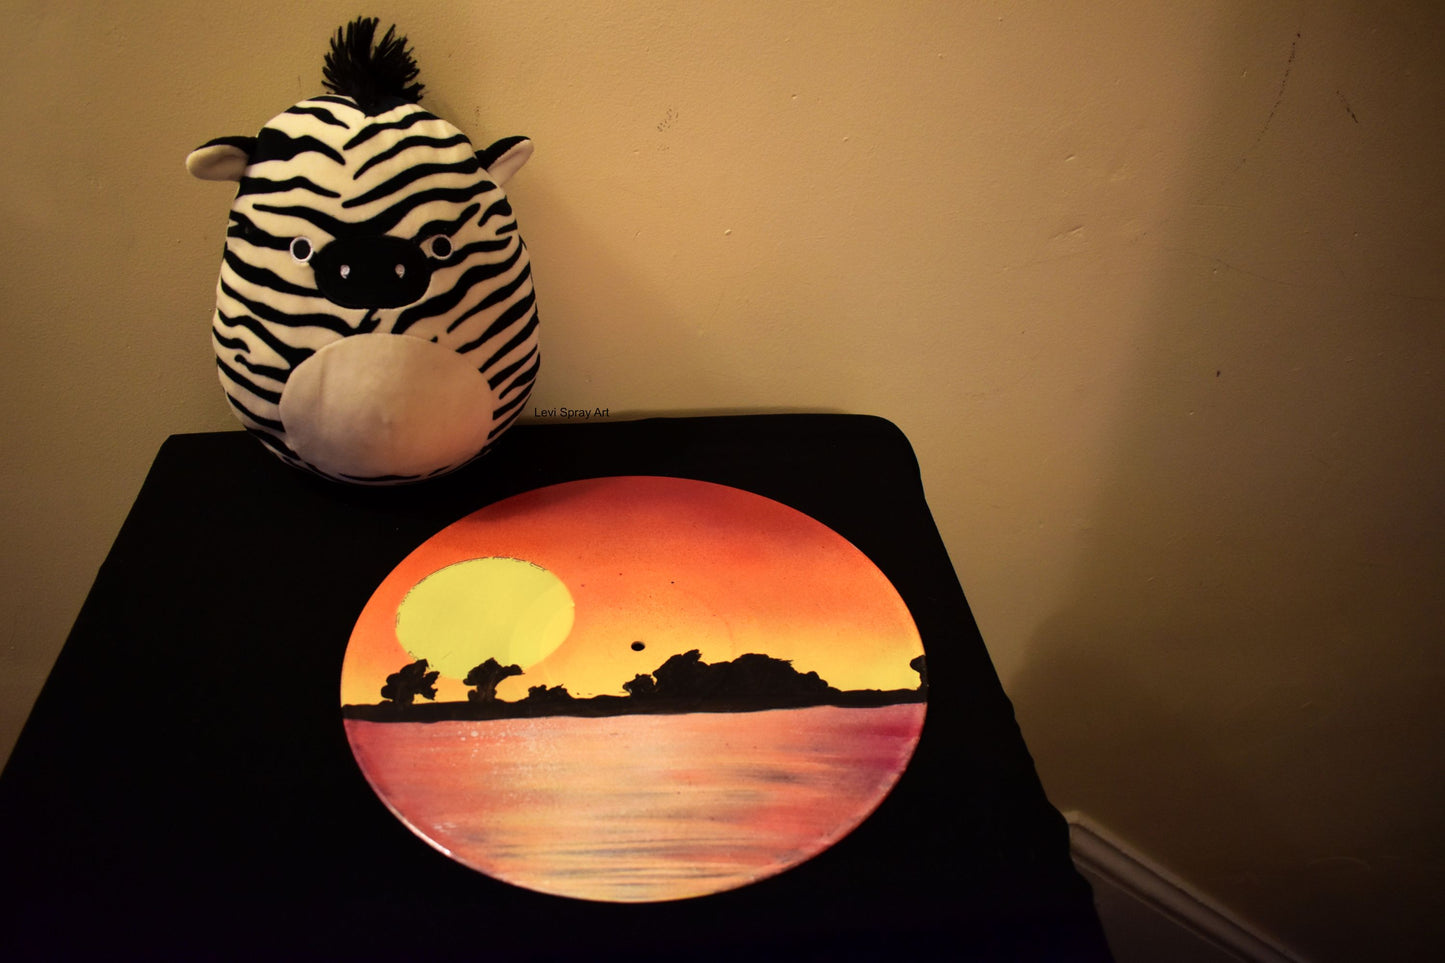 "Sunset on the Island" by Levi Spray Art